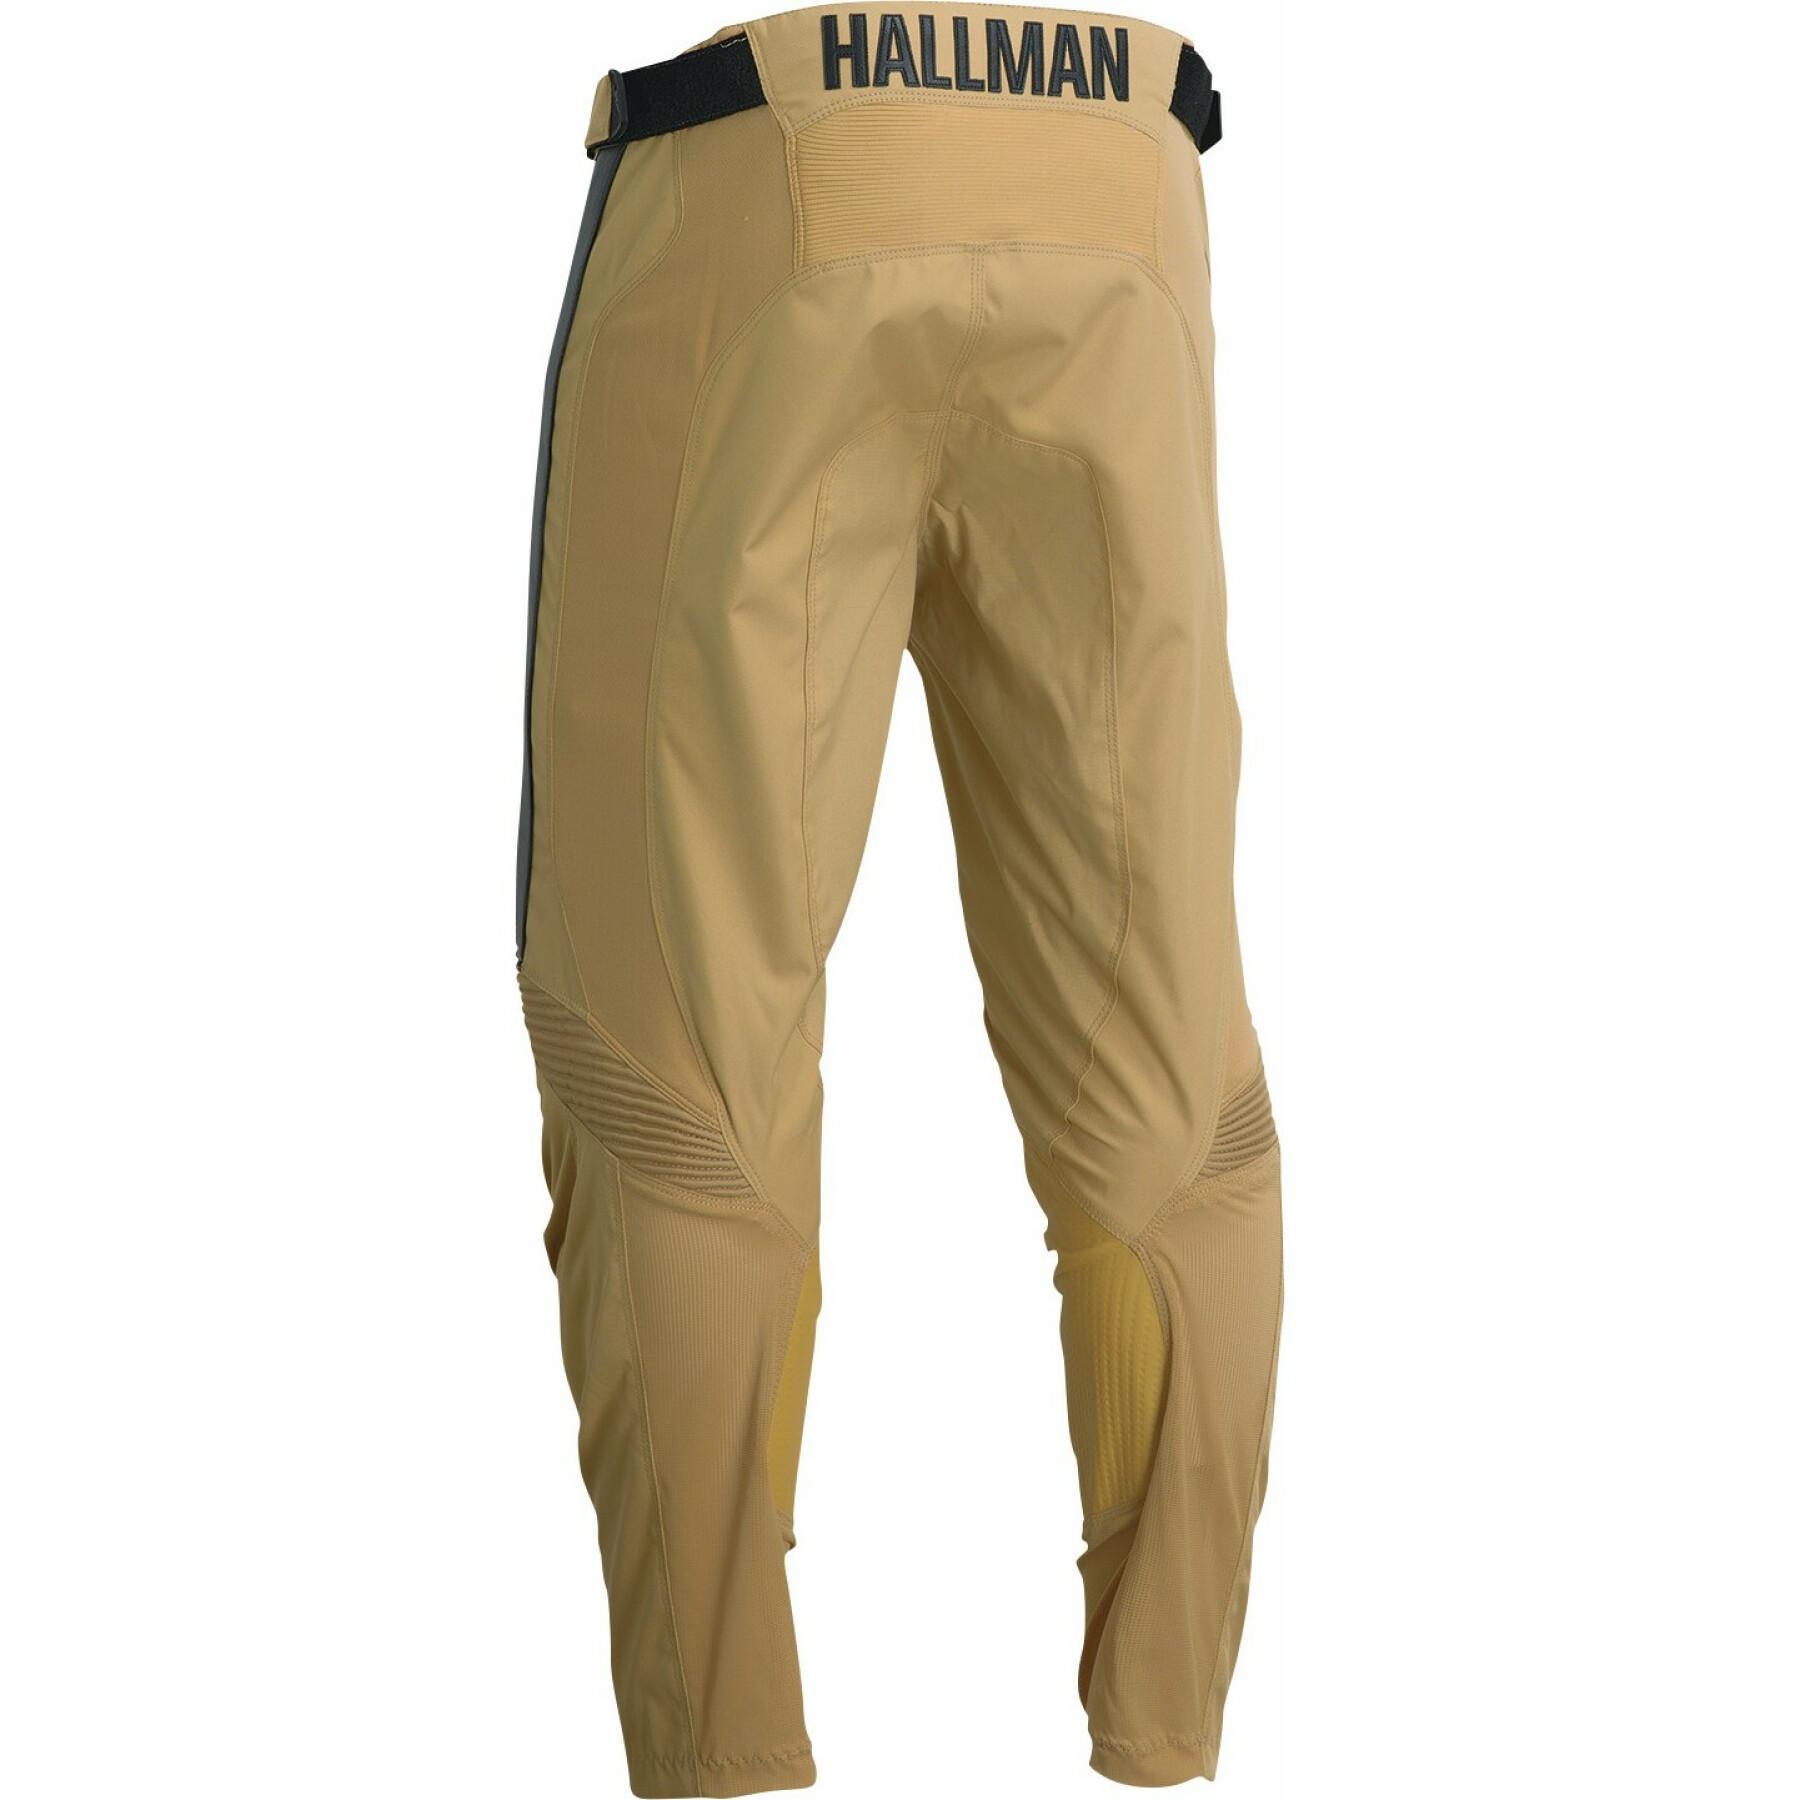 Motorcycle pants cross Thor S20 Hallman Legend